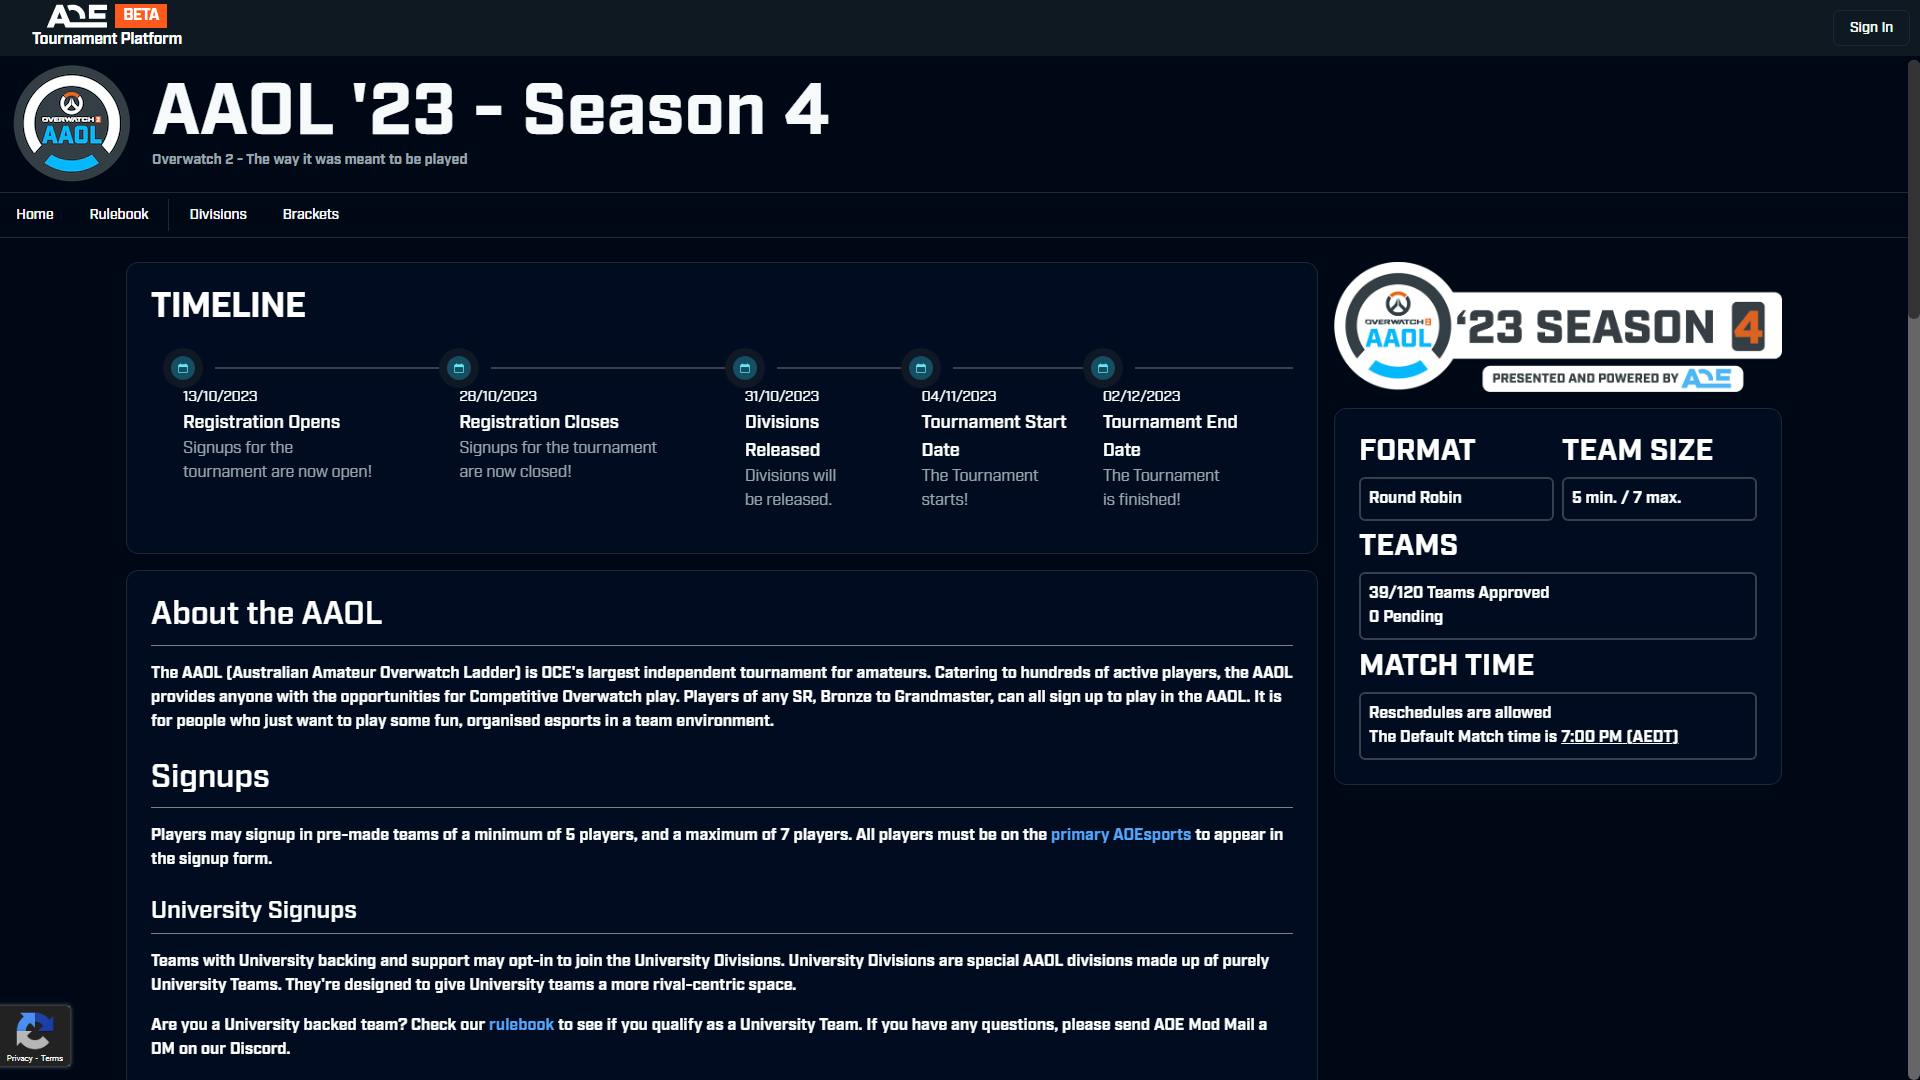 AAOL Season 4 '23 Tournament Page